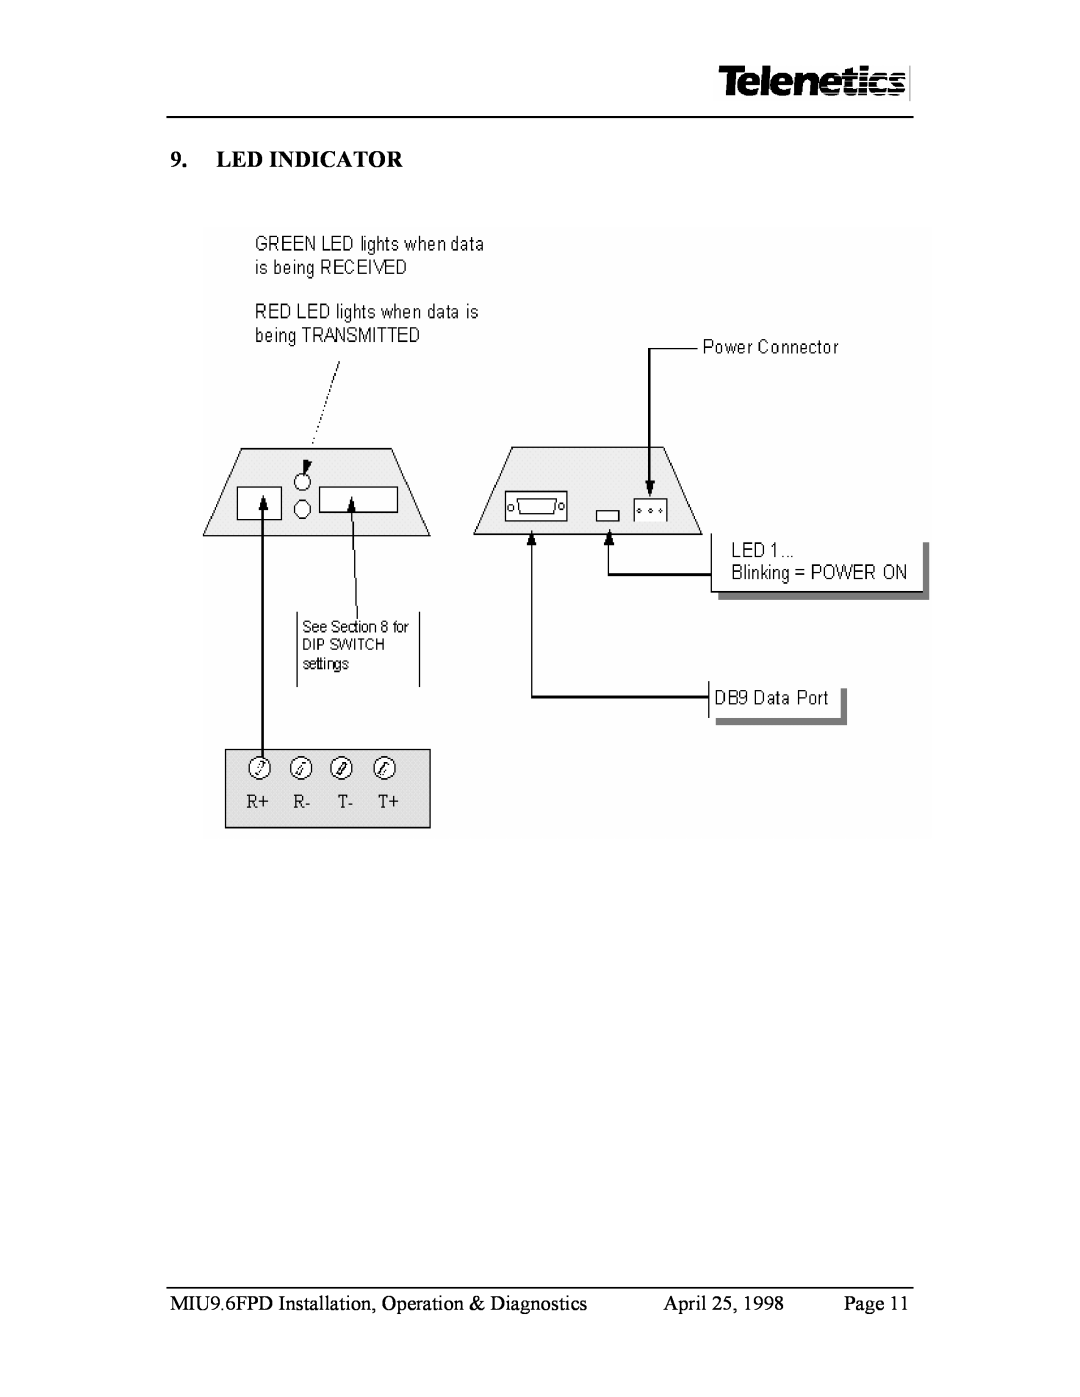 Telenetics manual Led Indicator, MIU9.6FPD Installation, Operation & Diagnostics, April 25, Page 